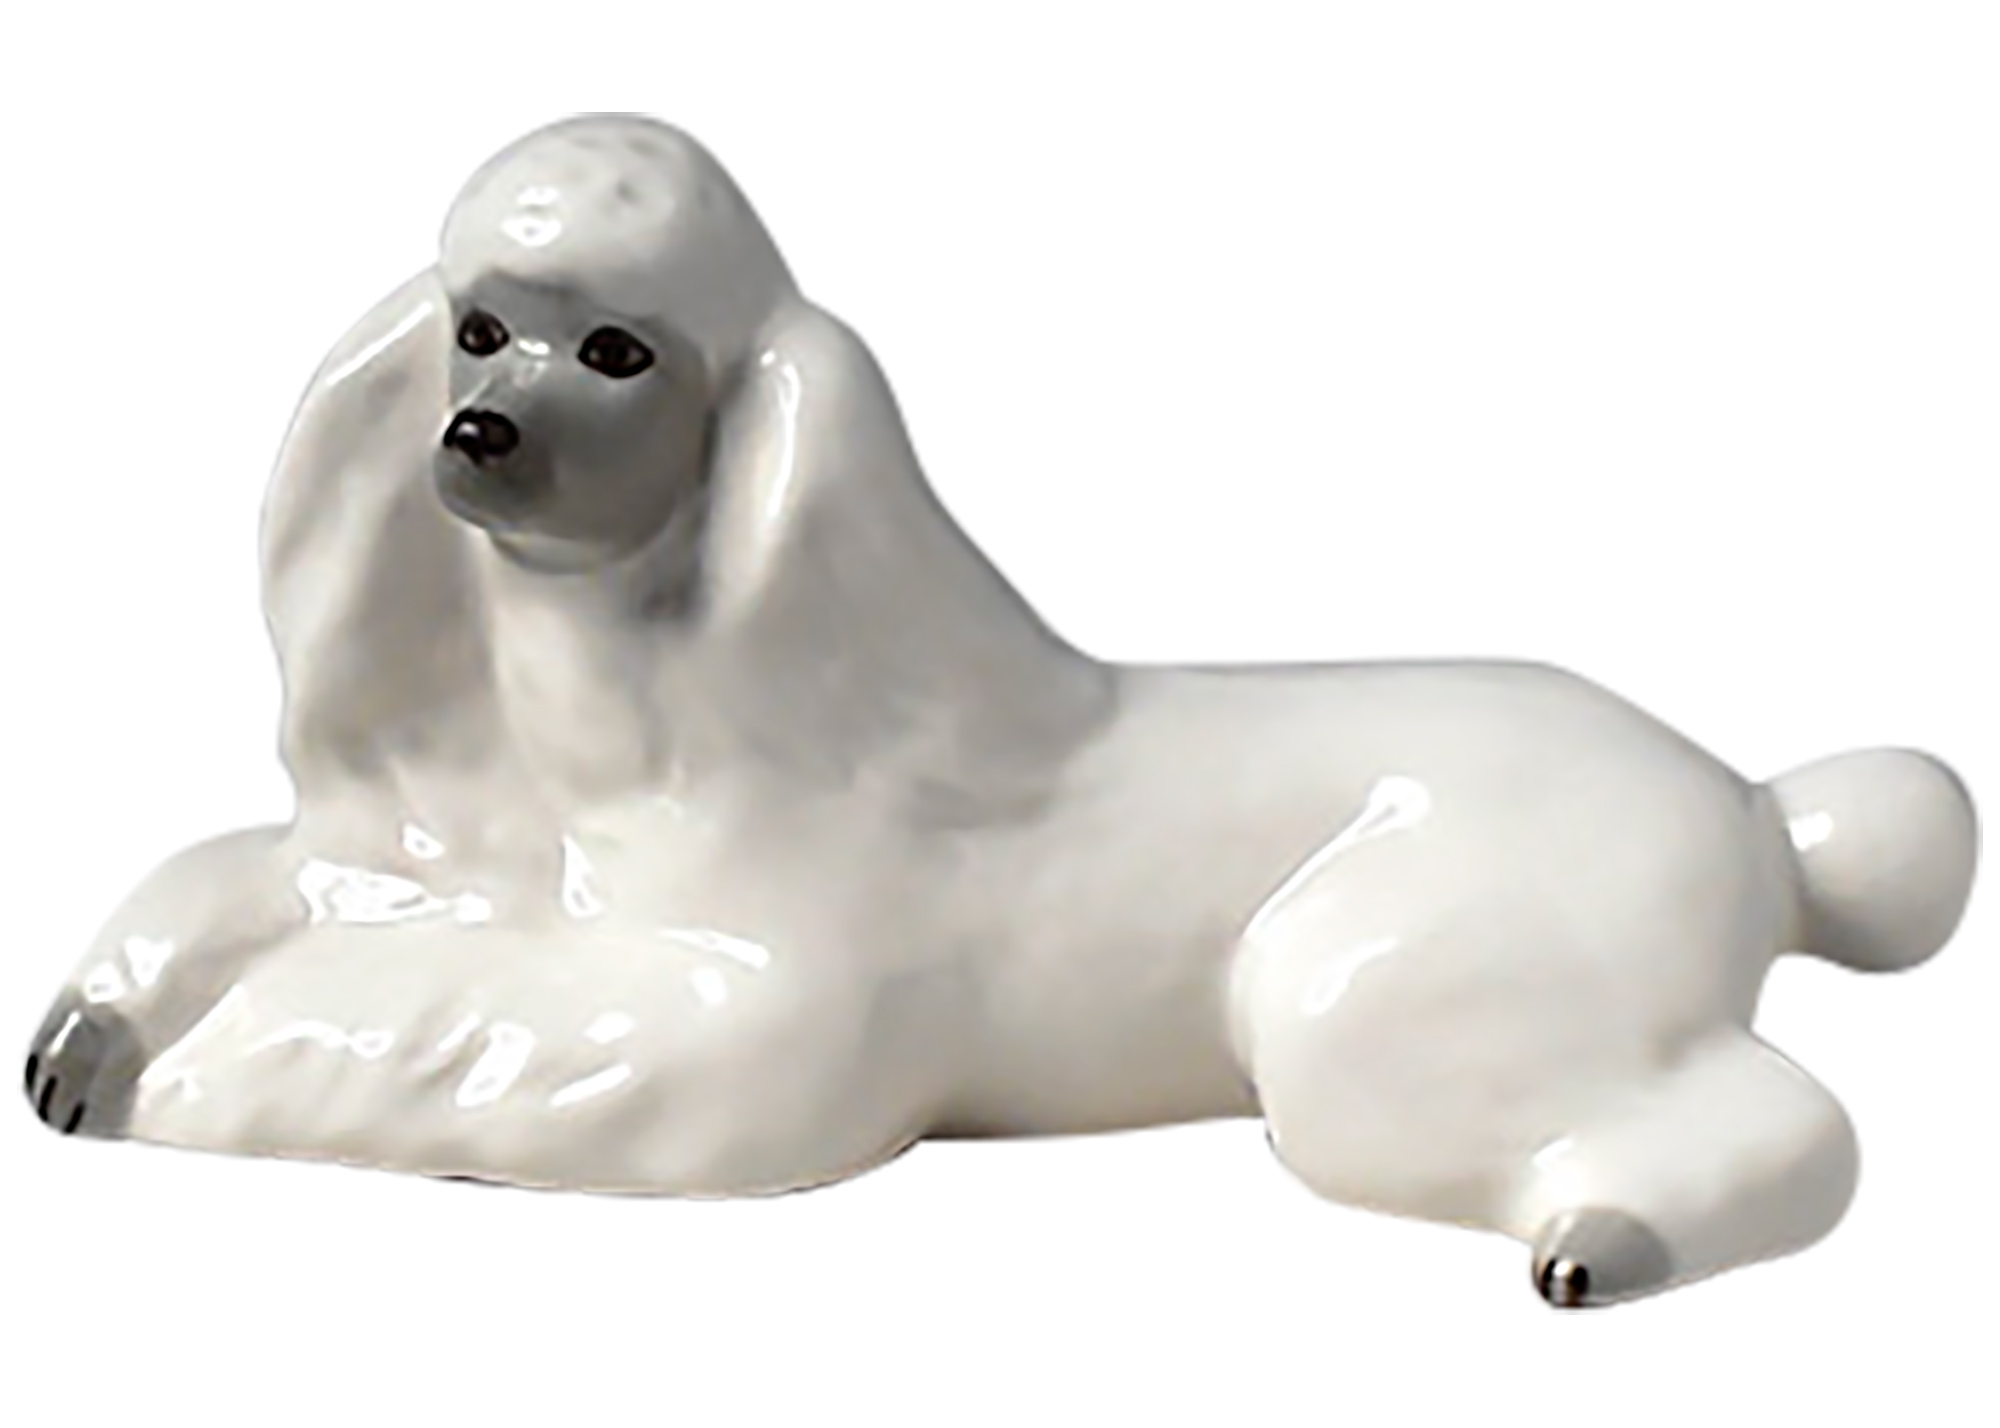 Buy White Poodle Figurine Lying Down at GoldenCockerel.com